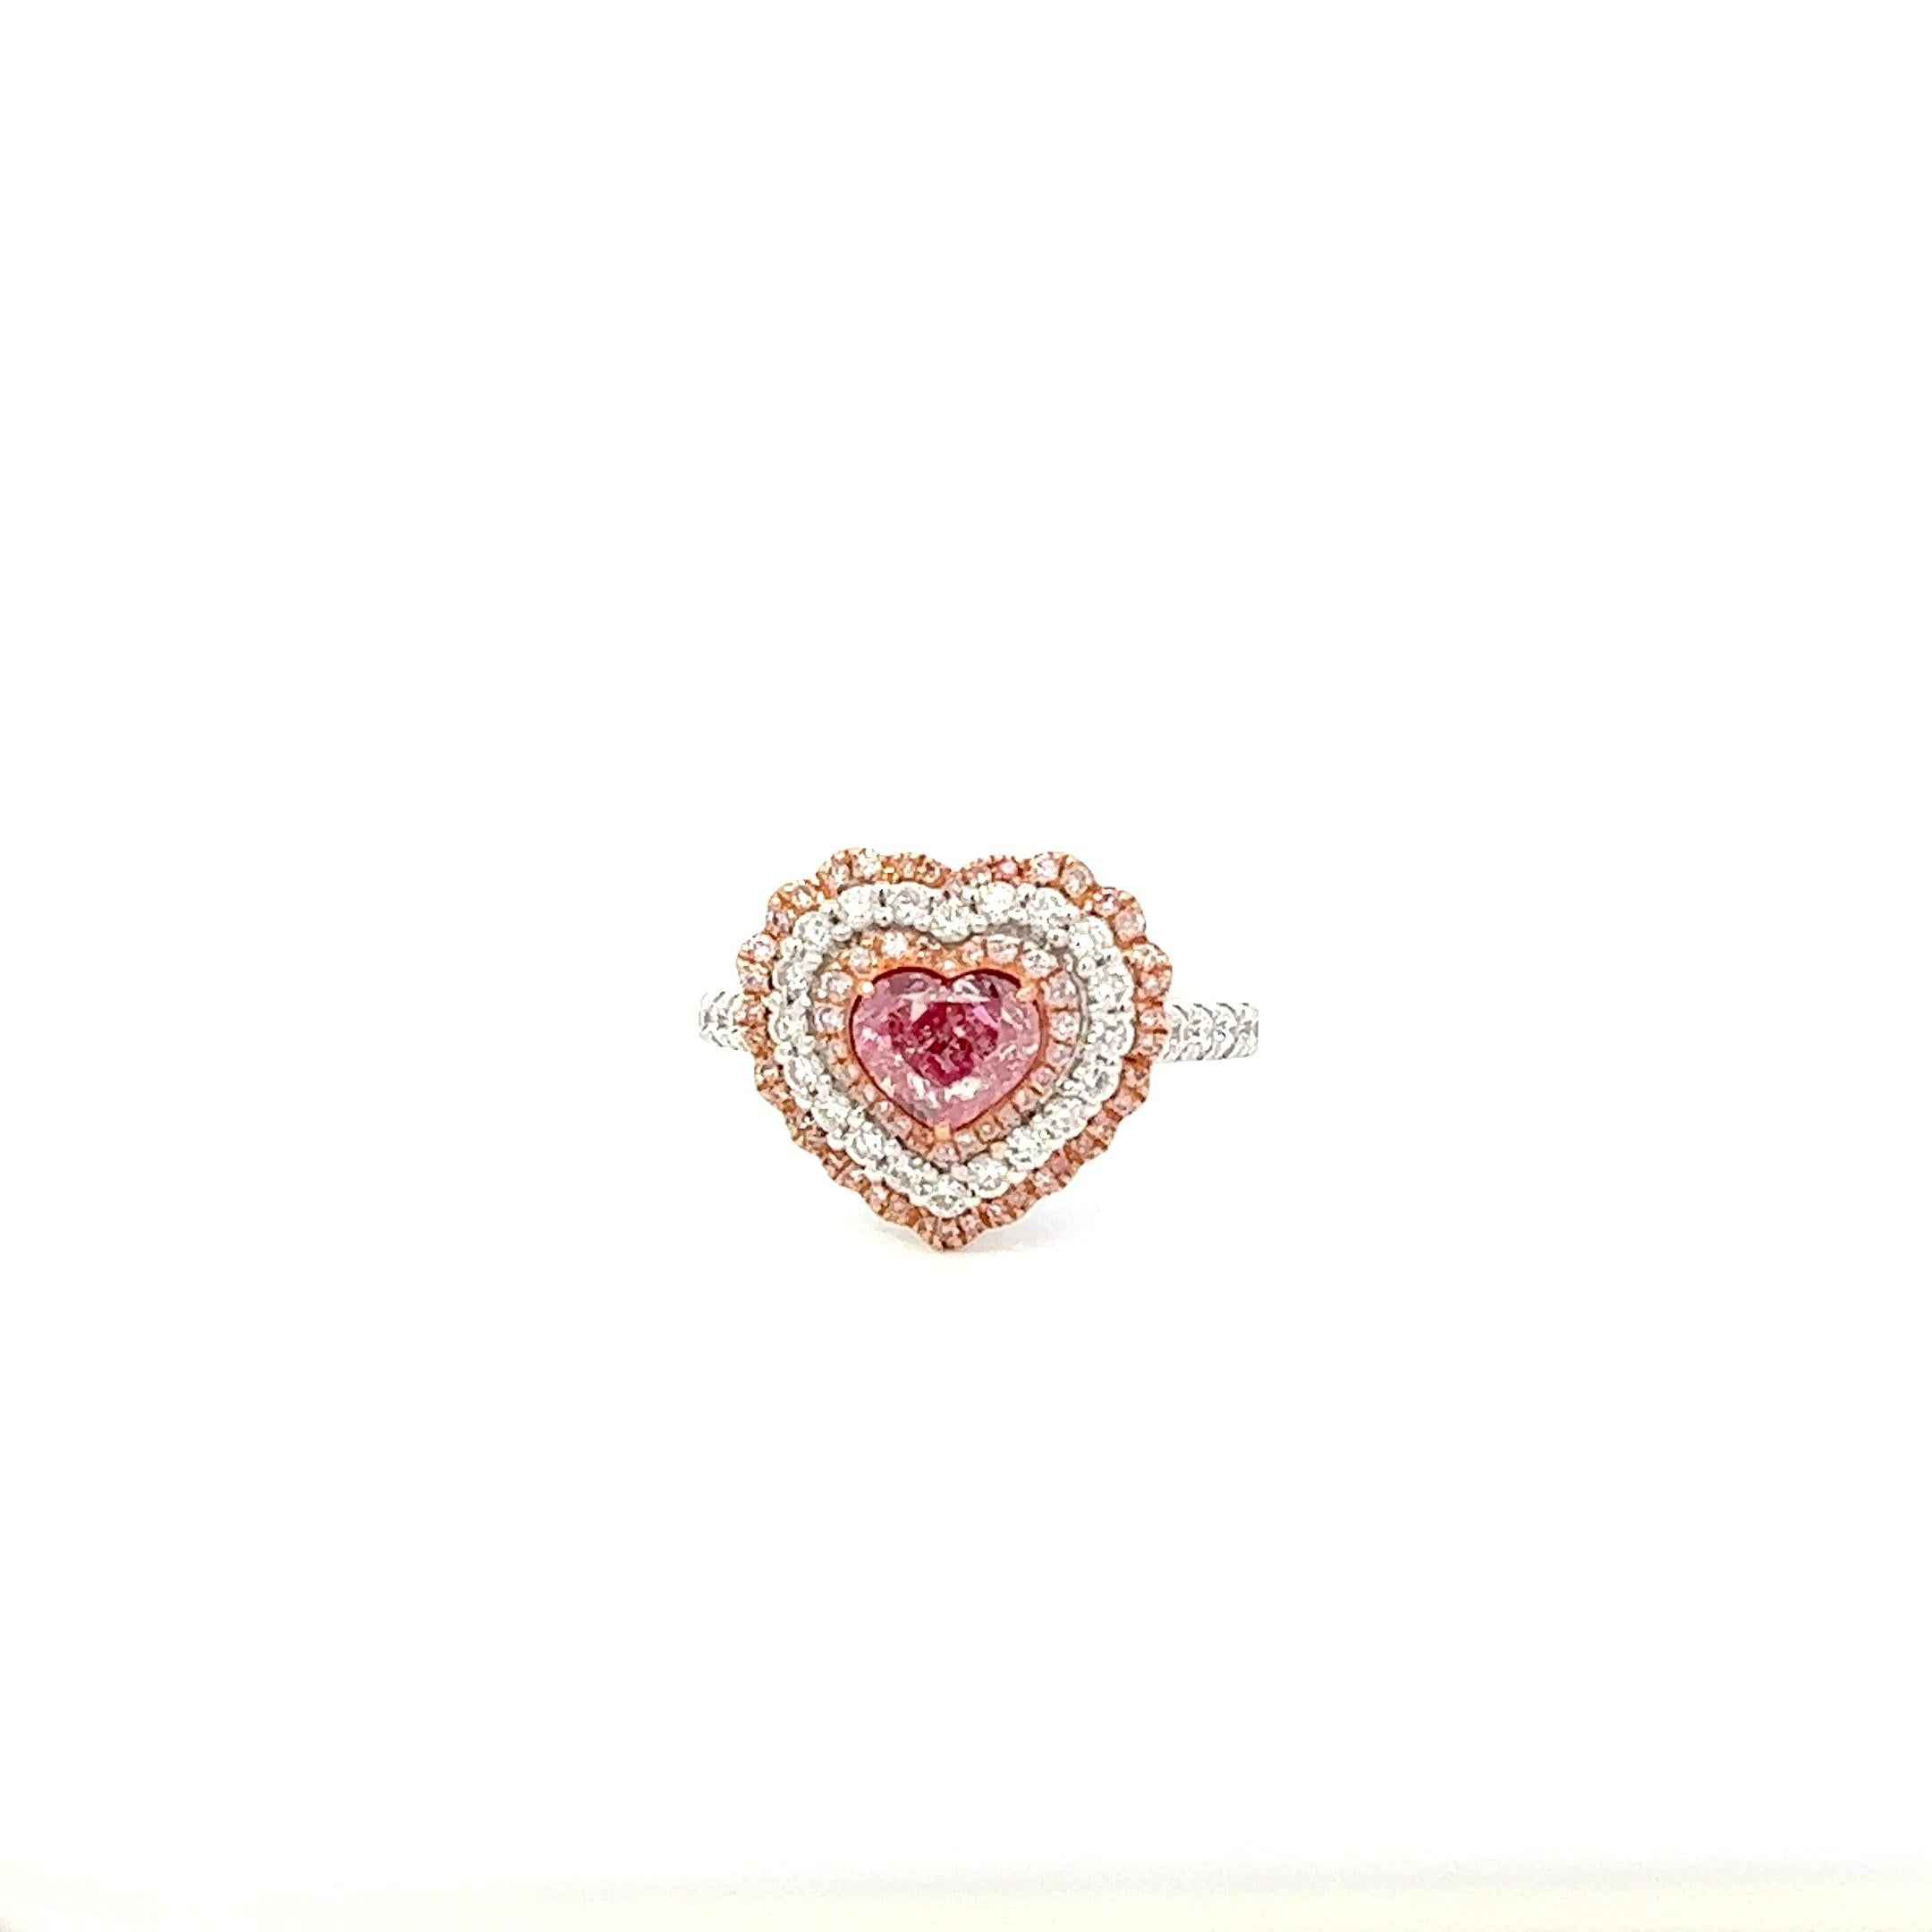 Center: 1.02ct Light Pinkish Brown Heart I1 GIA # 5373734540
Setting: 18k White Gold 0.65ctw Pink and White Diamonds